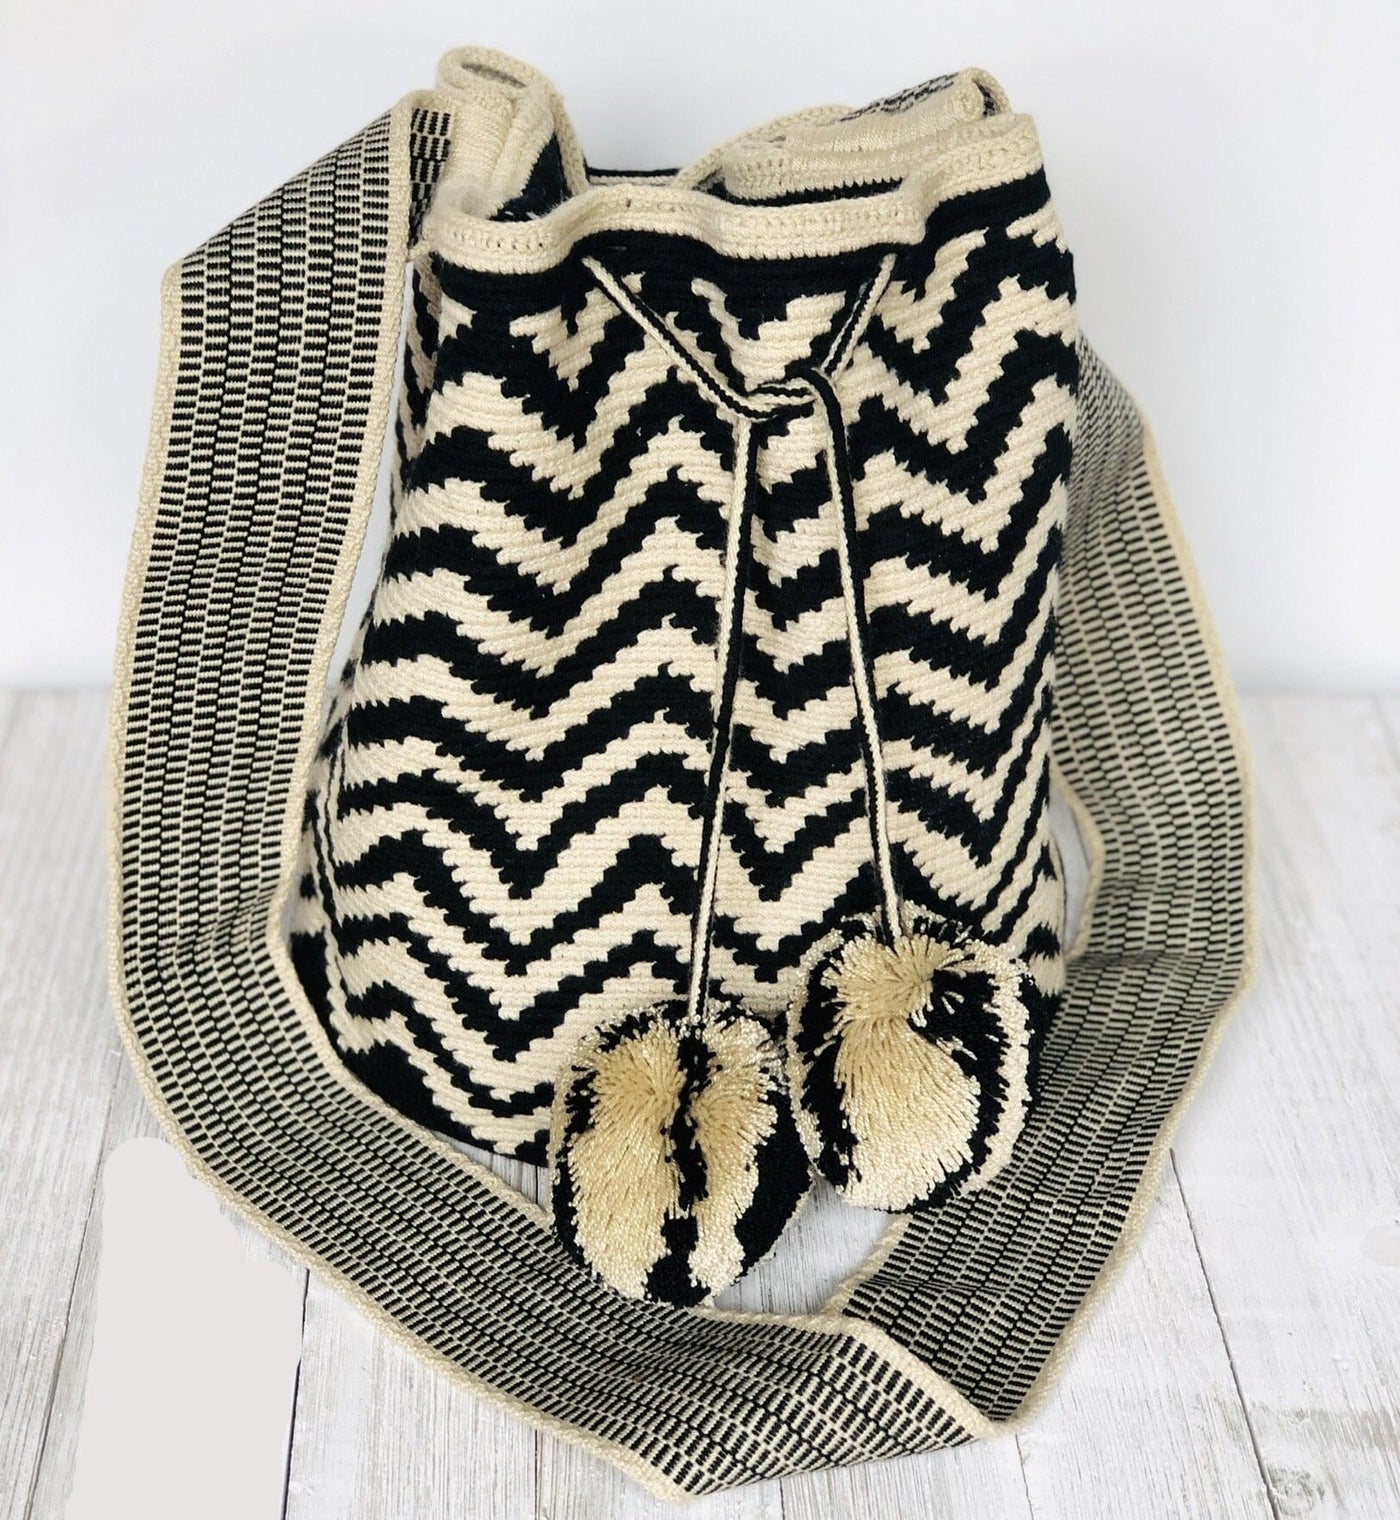 Black and White Crochet Bag | Stylish Bag | Chevron Pattern | pompoms